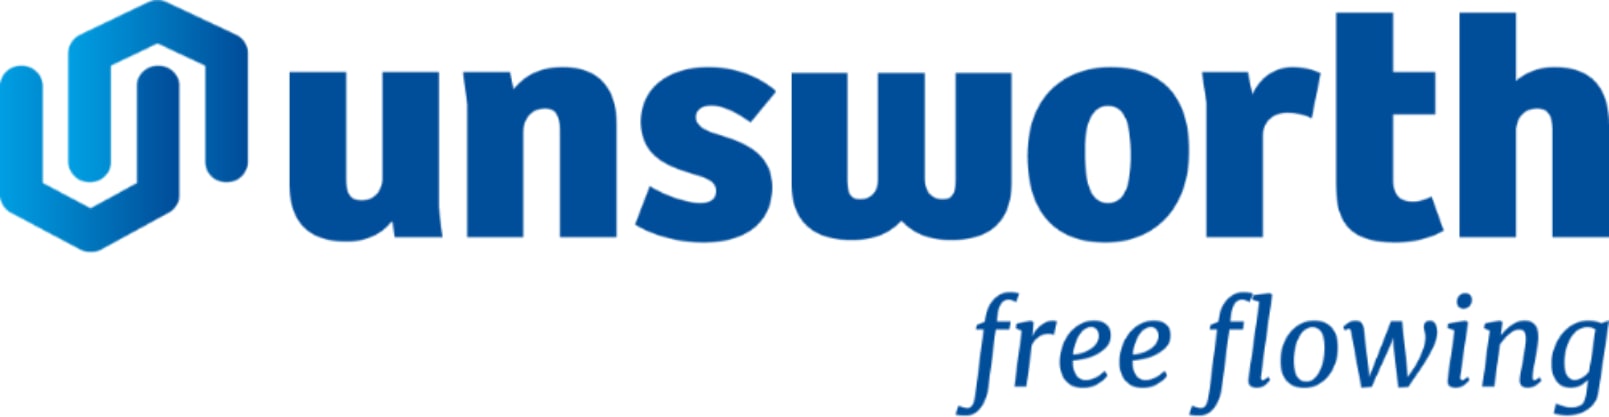 Unsworth logo